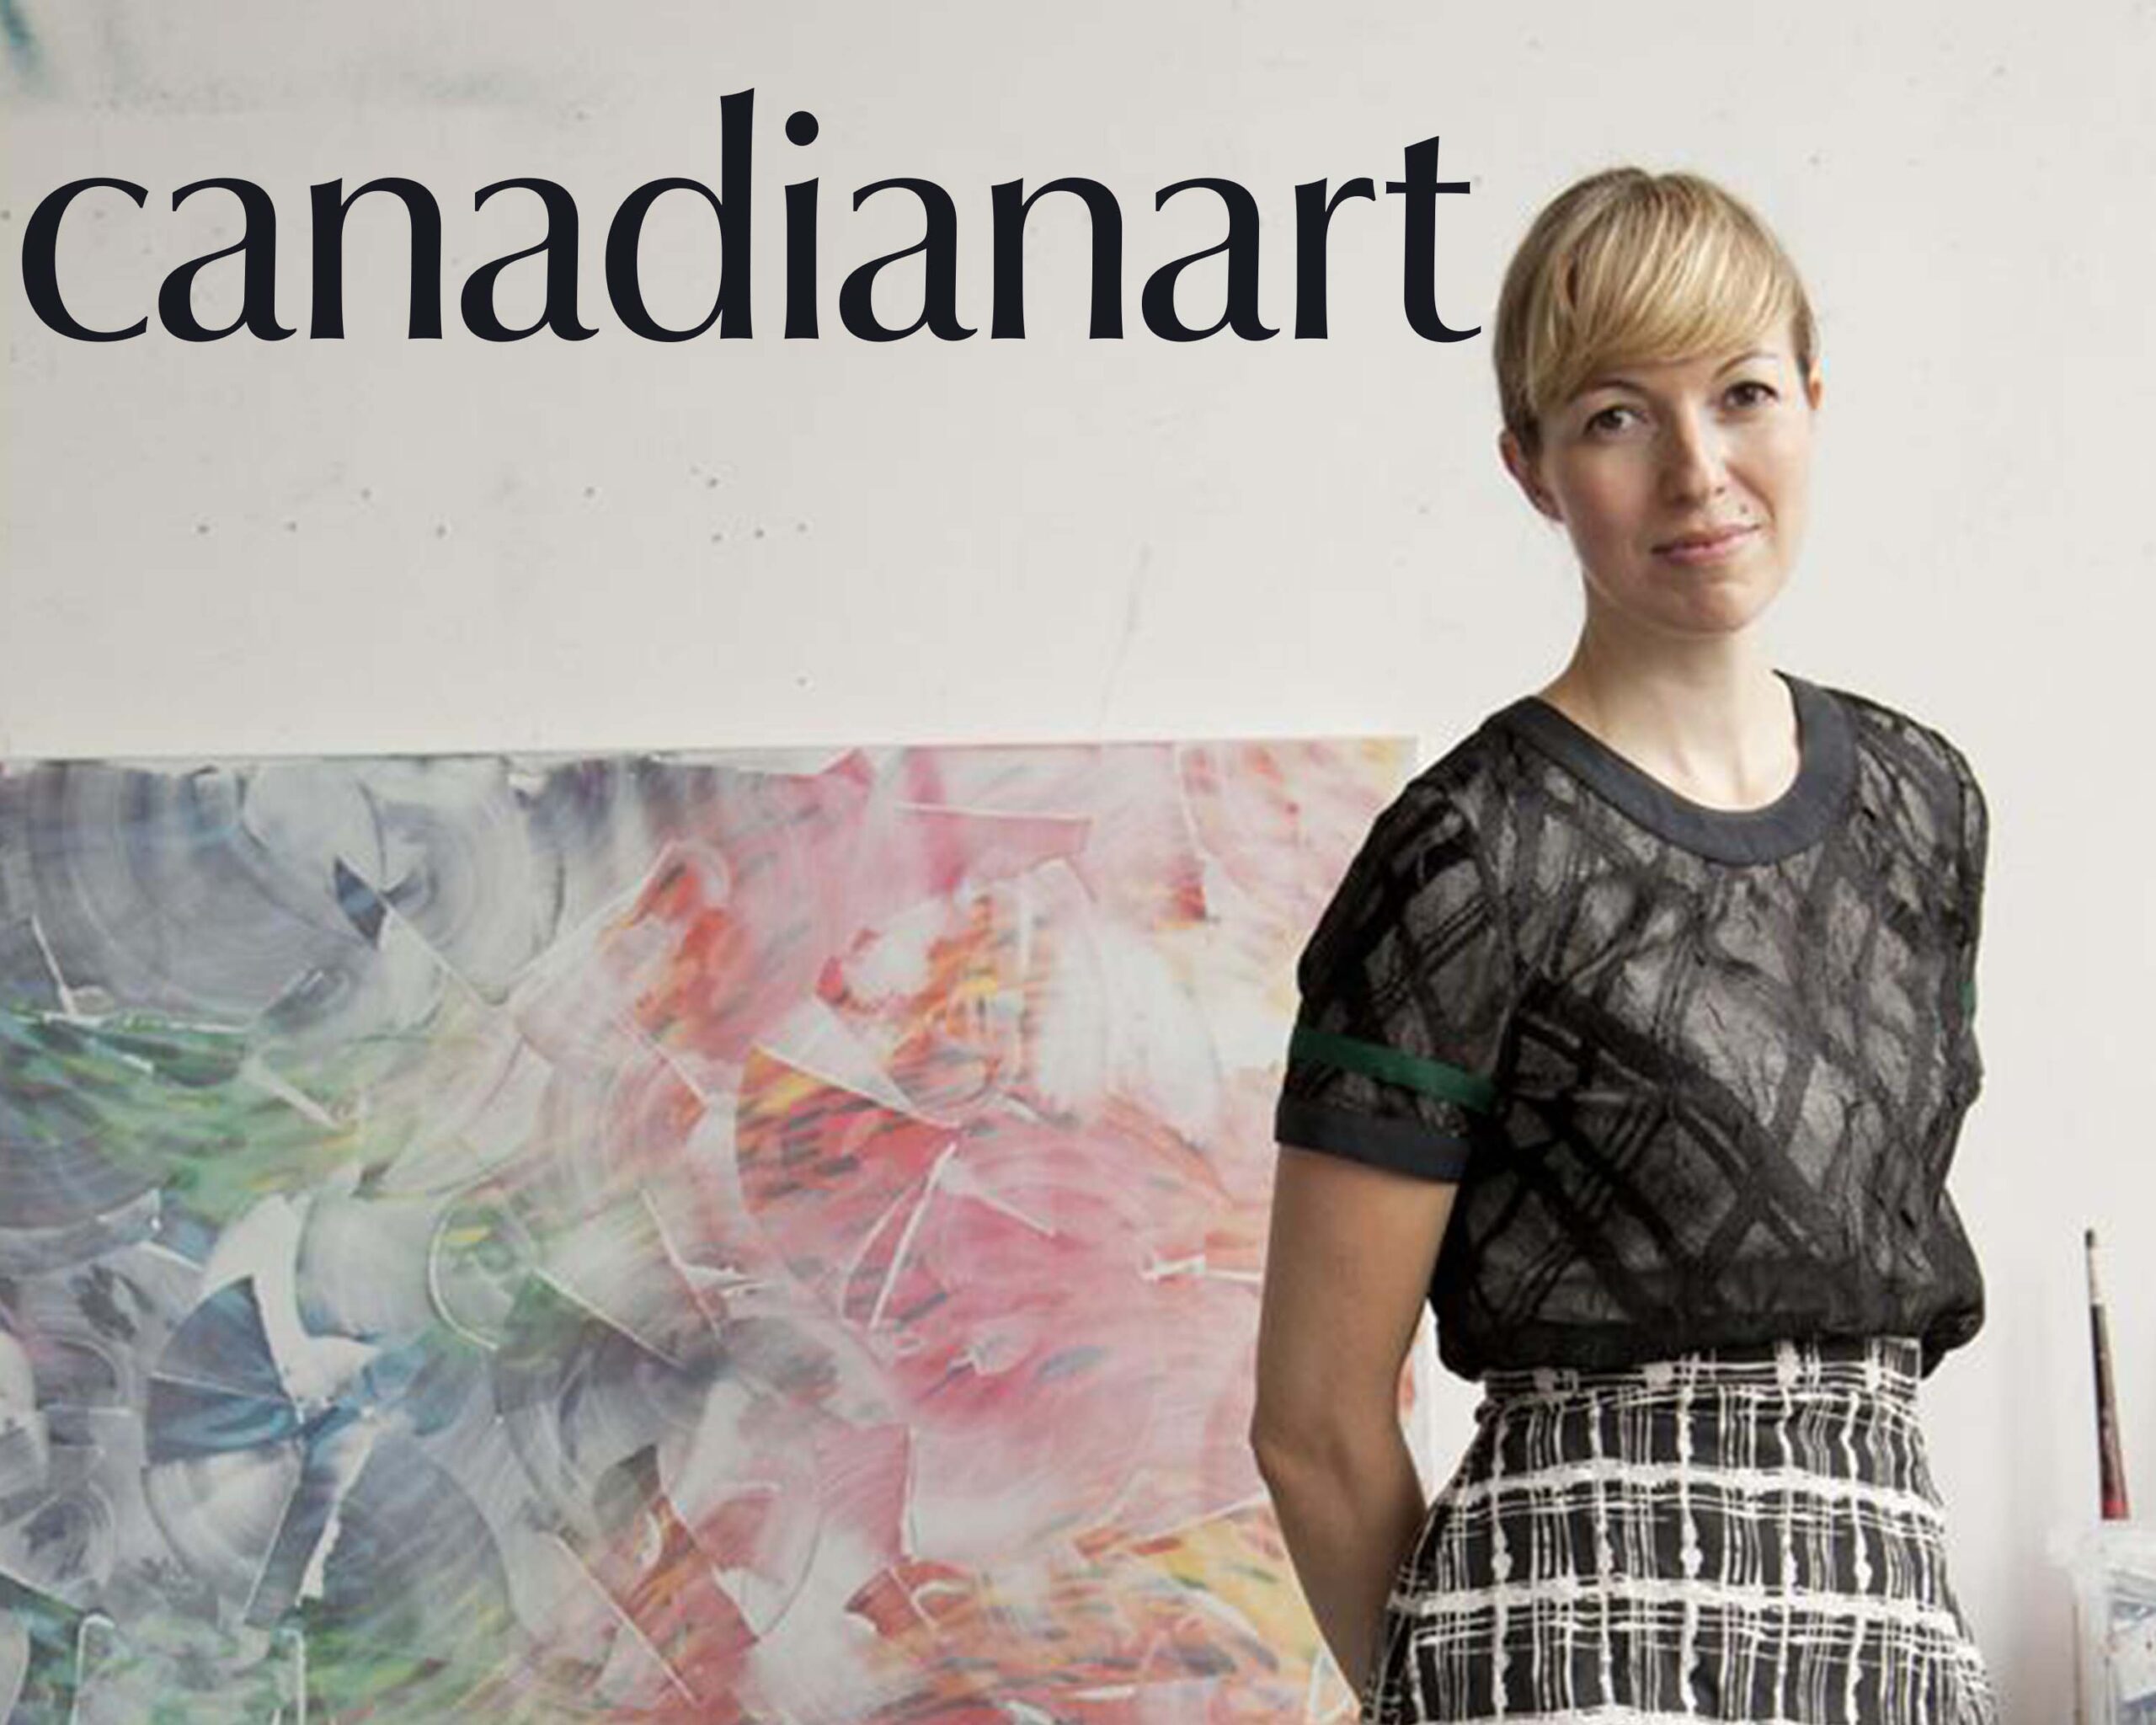 Canadian Art, 2013 | 5 Questions for Julia Dault